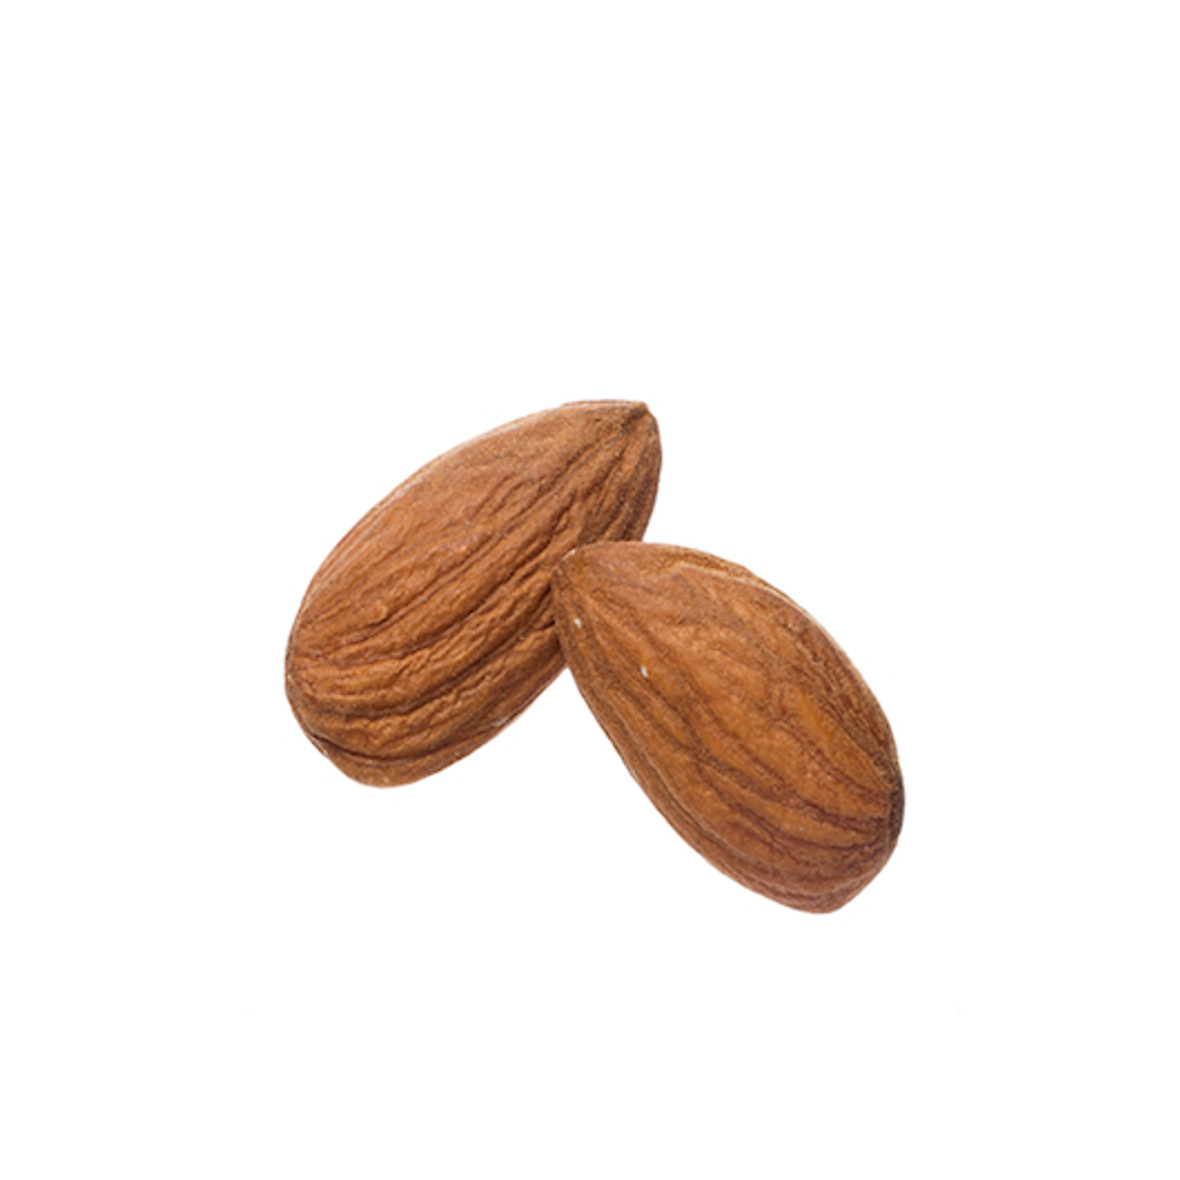 Fisher Whole Almond Natural, 5 Pound, 1 Per Case